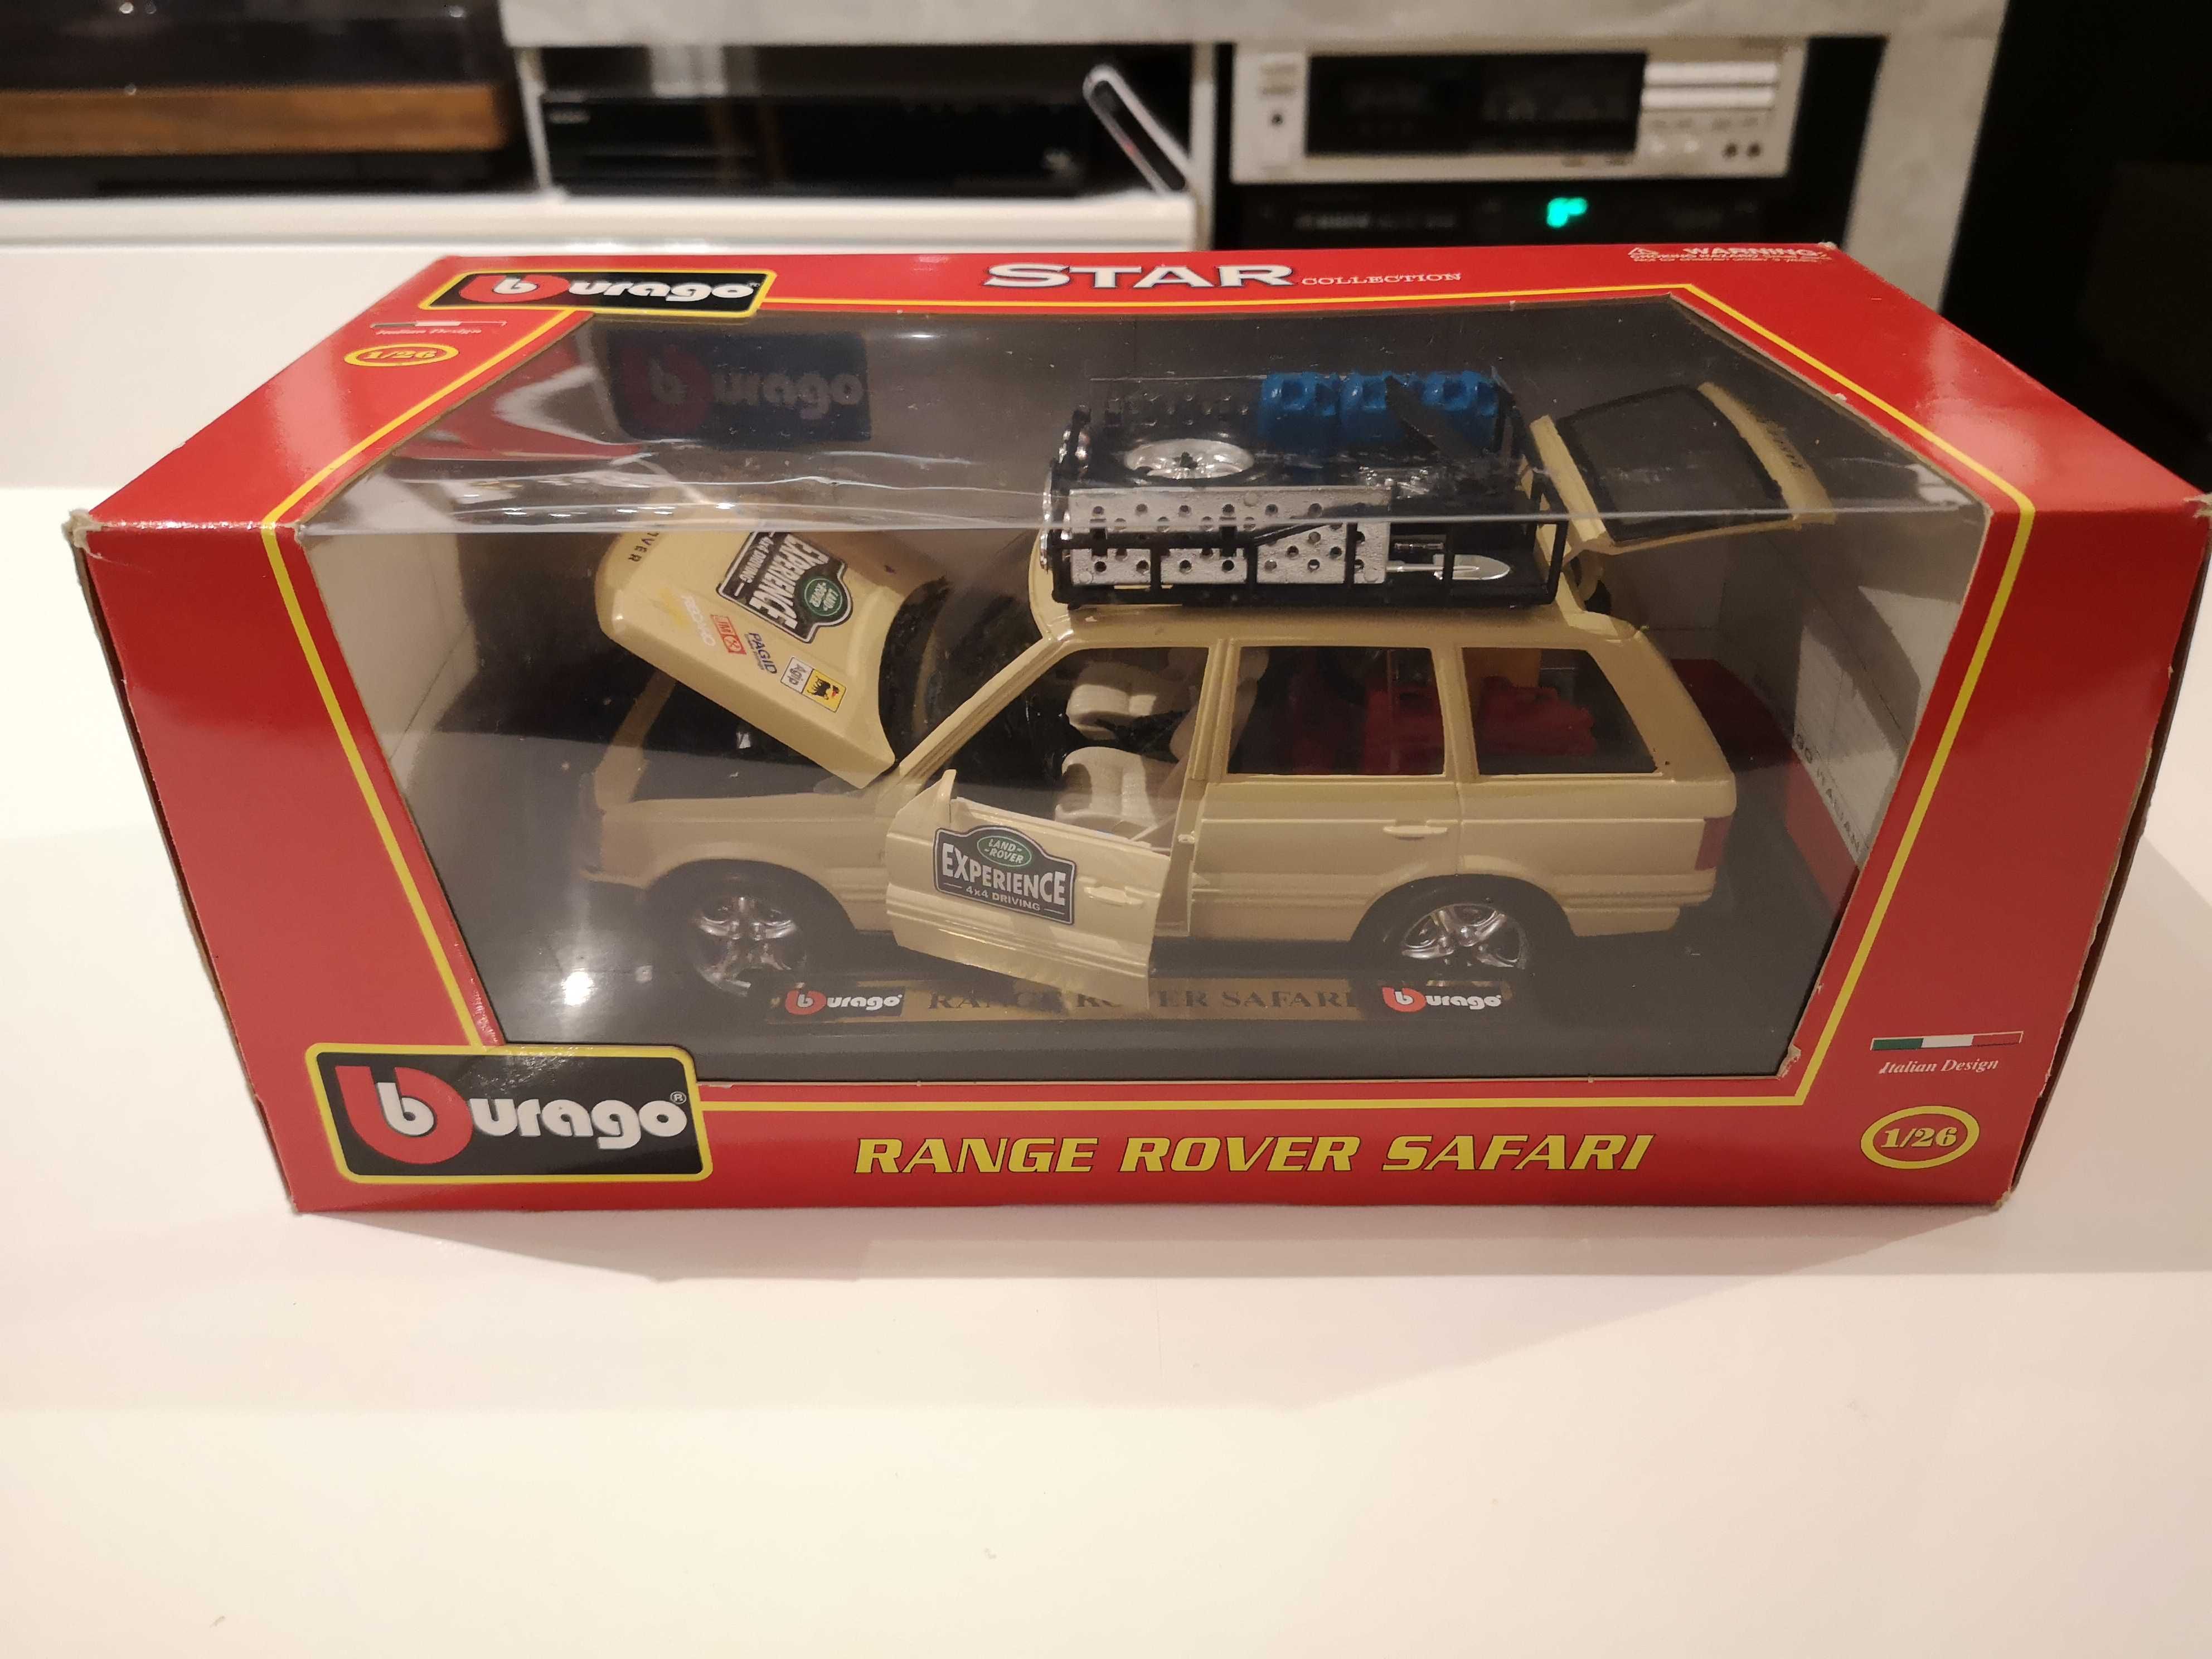 Burago Range Rover Safari Made in Italy, Star Colection 1/26